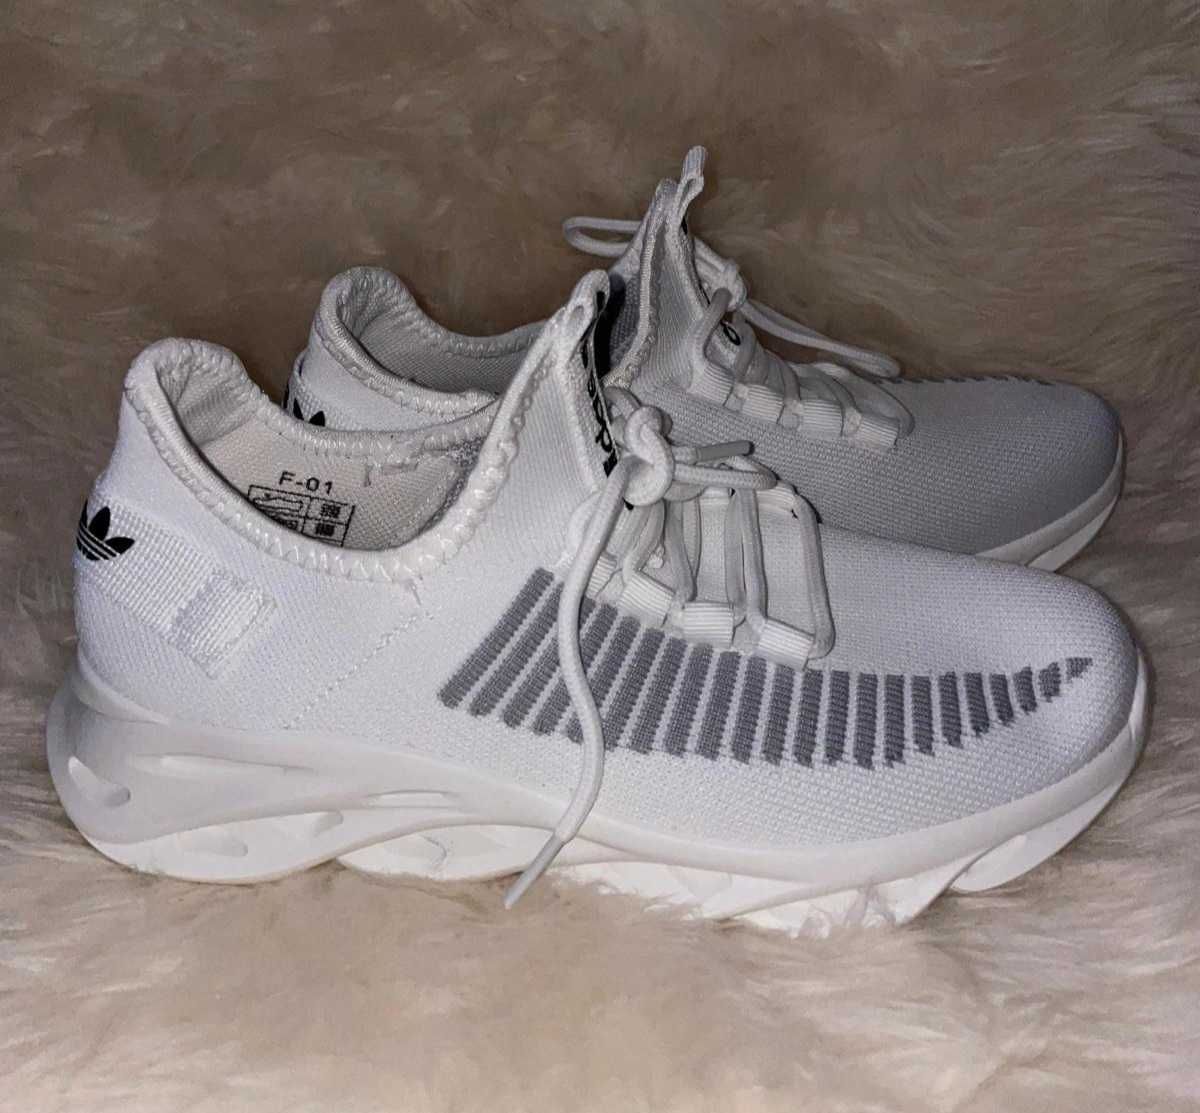 Pantofi sport Adidas dama albi noi din panza usori talpa moale 36